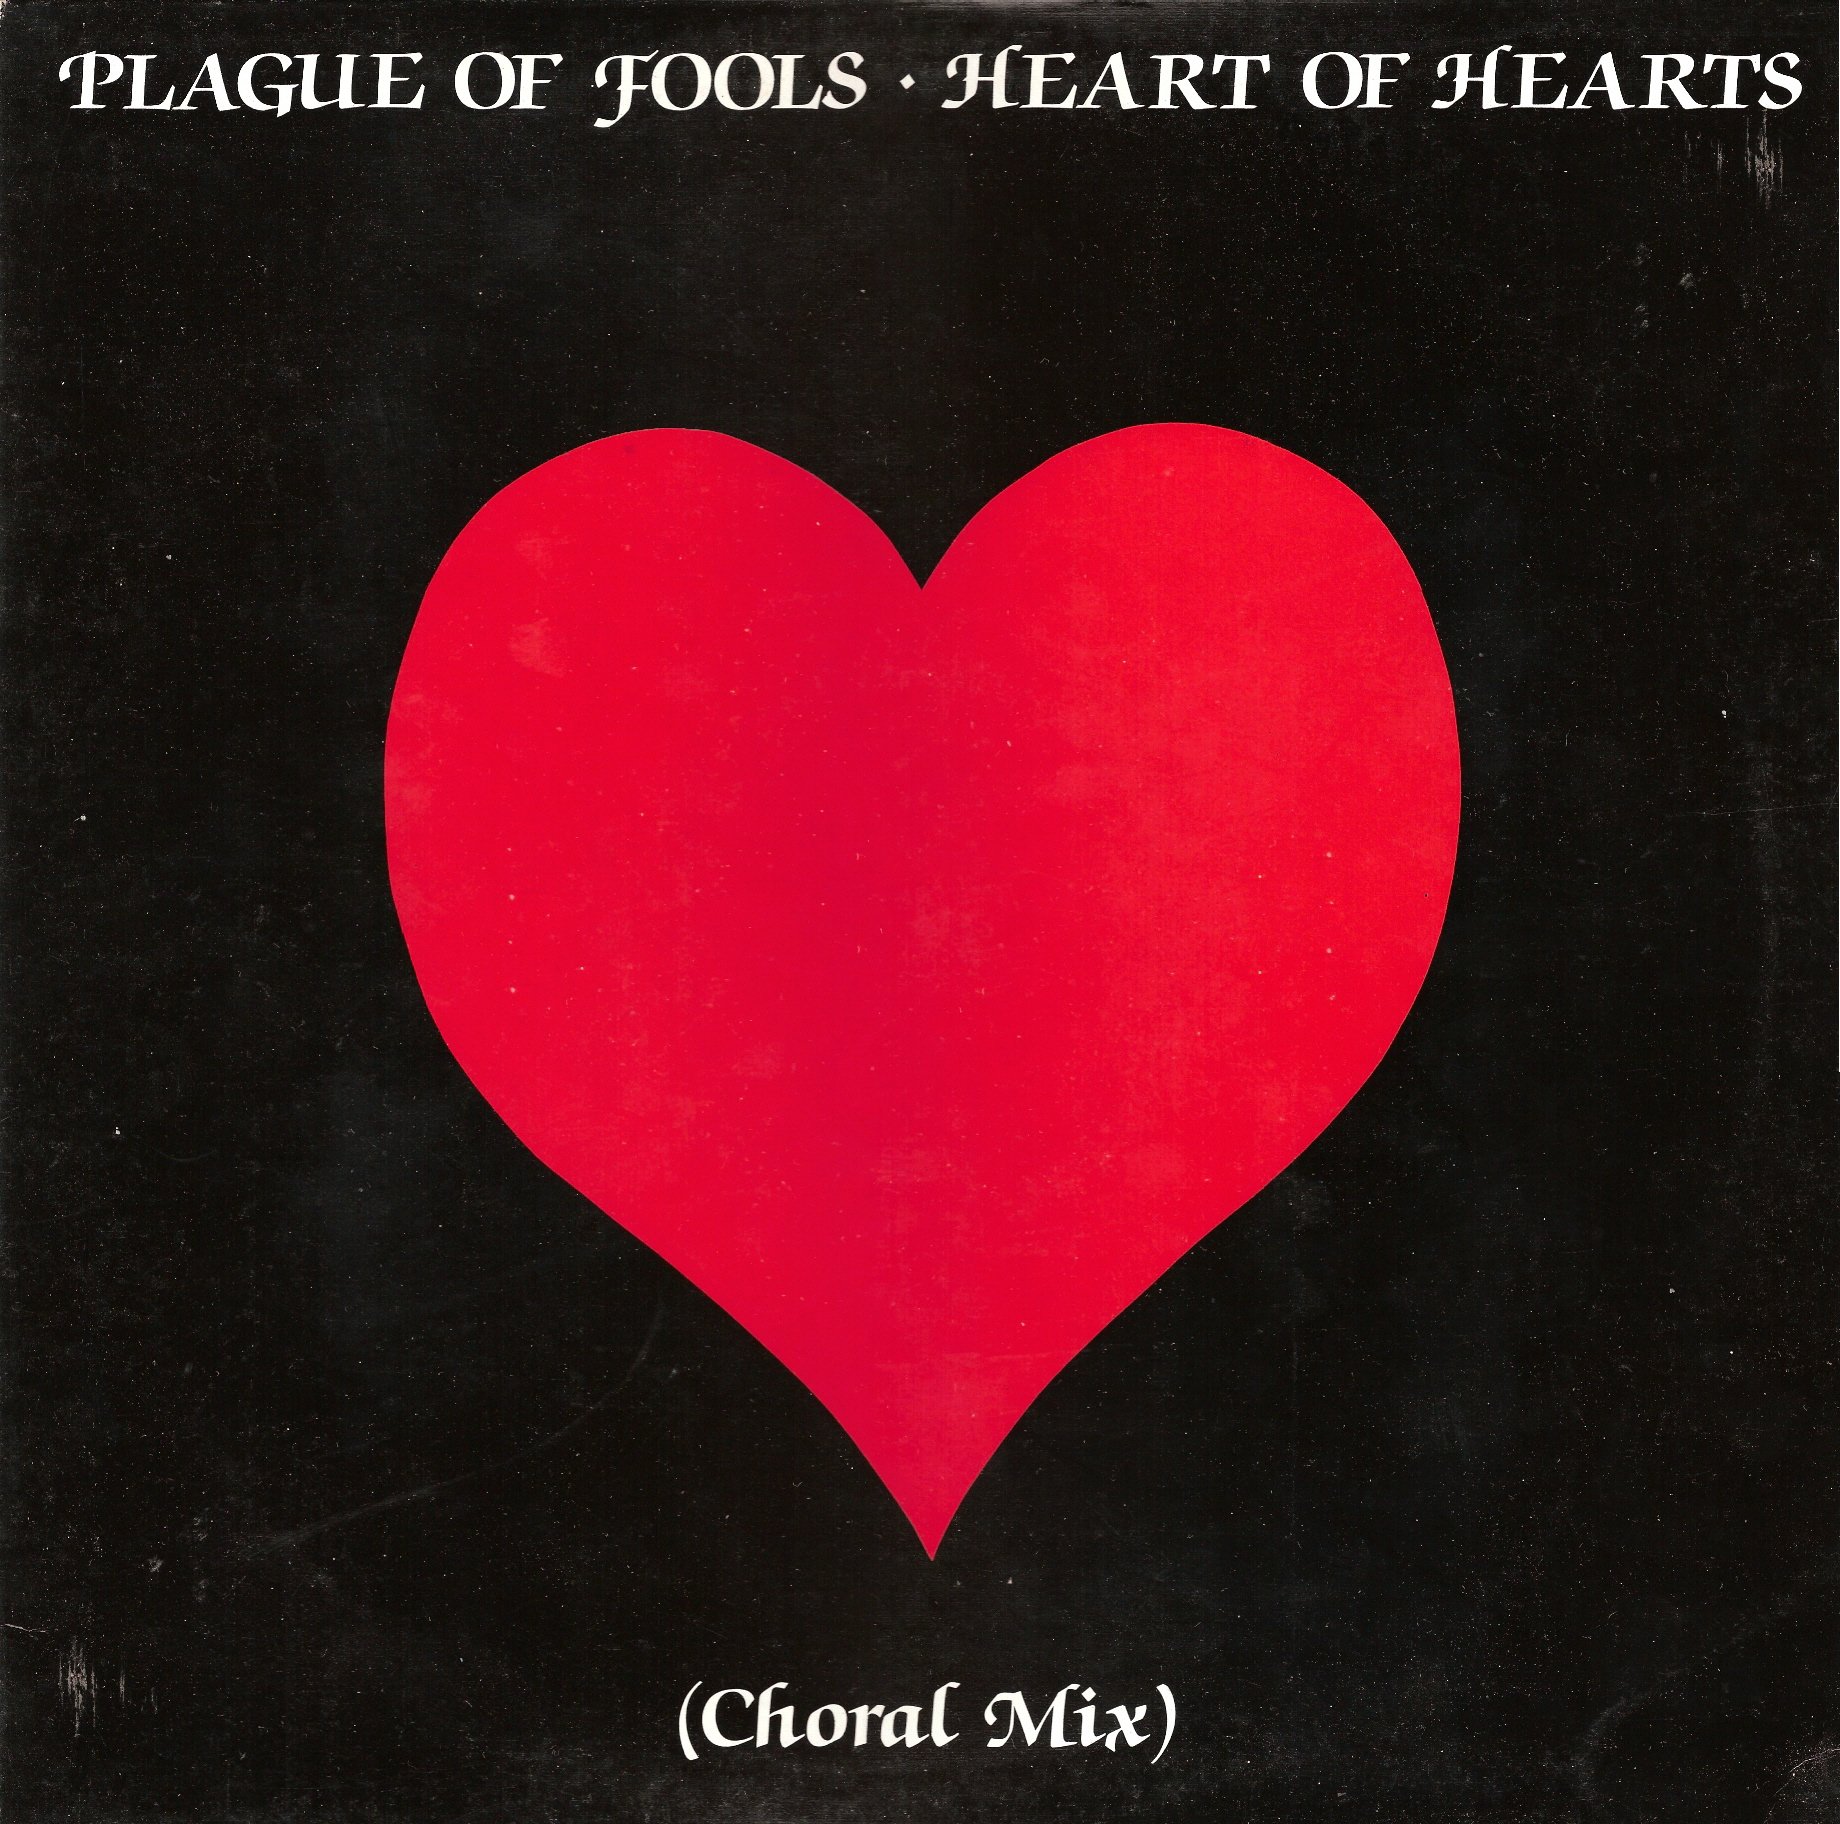 Heart Heart 1985. Plague of Fools Band. Fool's Heart.